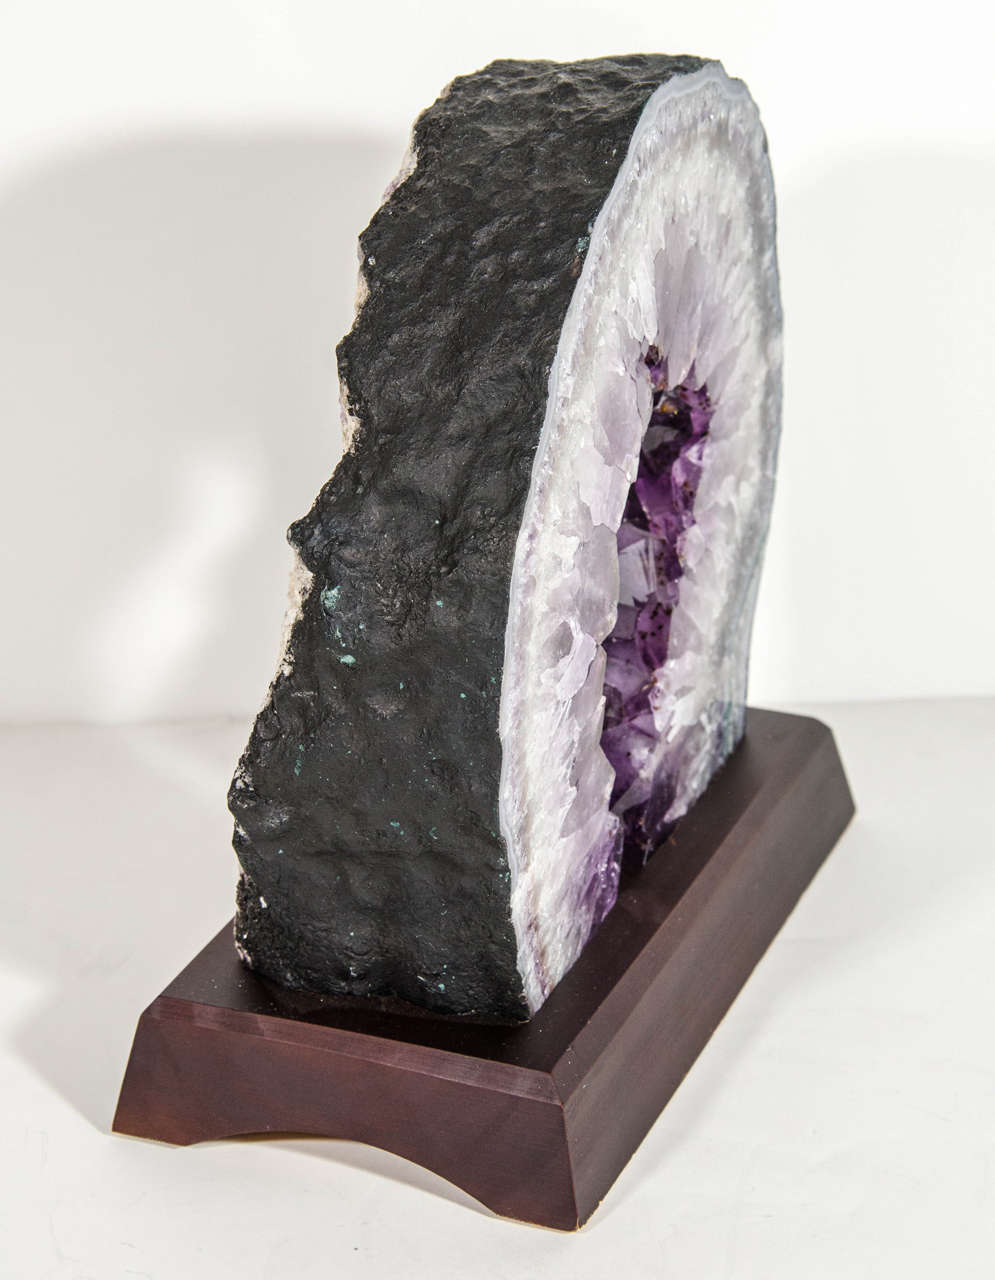 Brazilian Exquisite Quartz and Amethyst Geode Sculpture on Stand